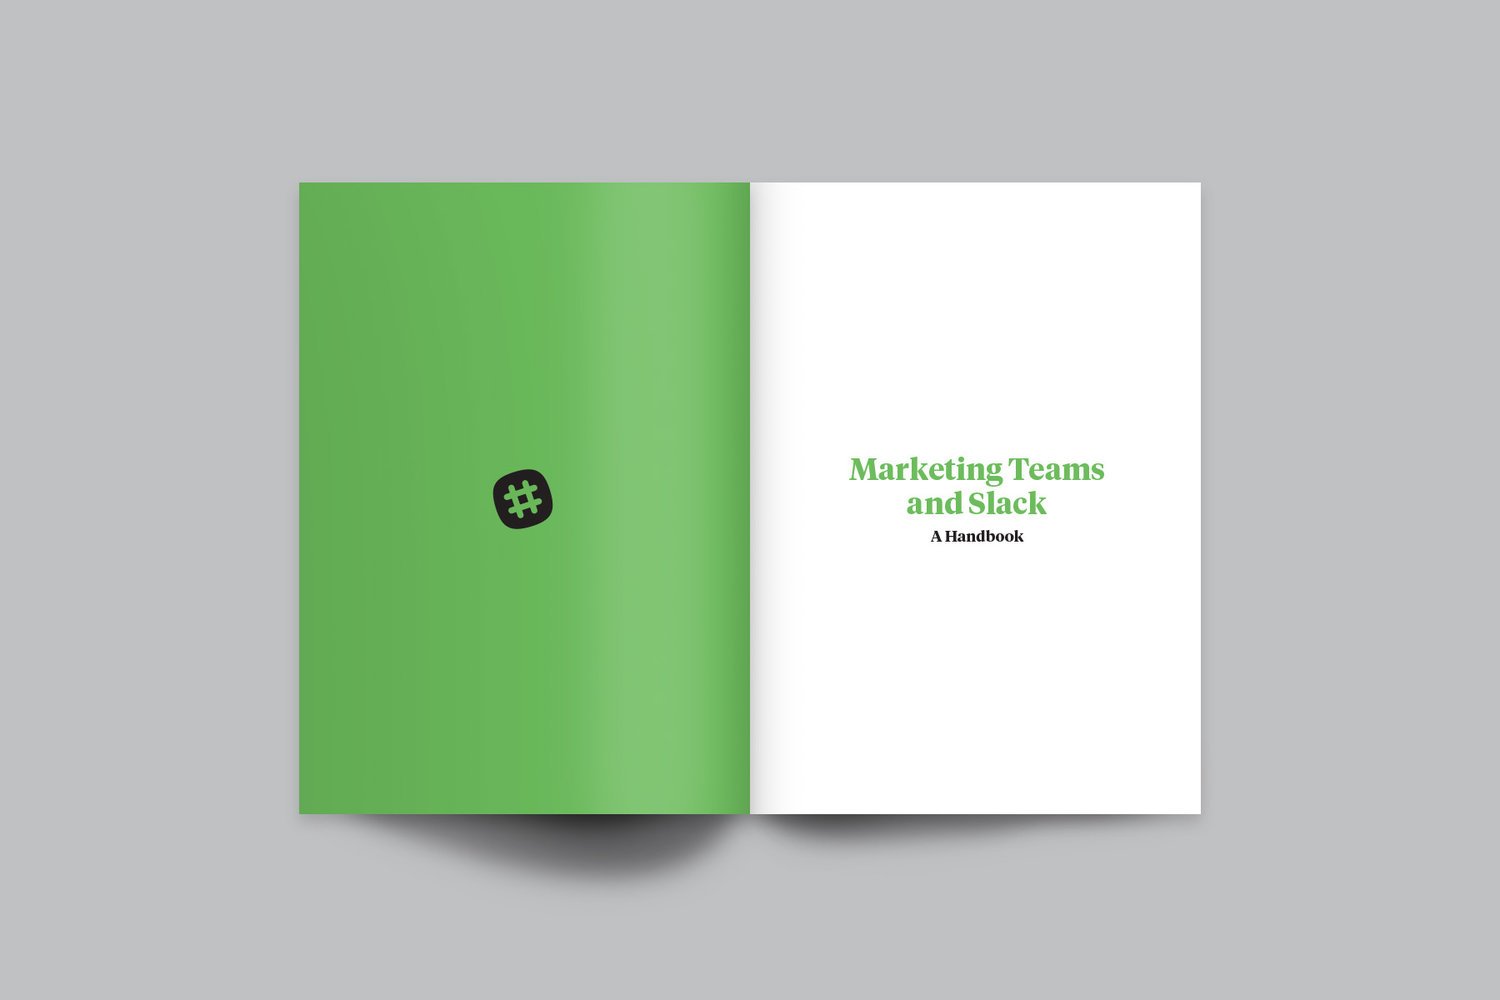 Marketing Teams handbook